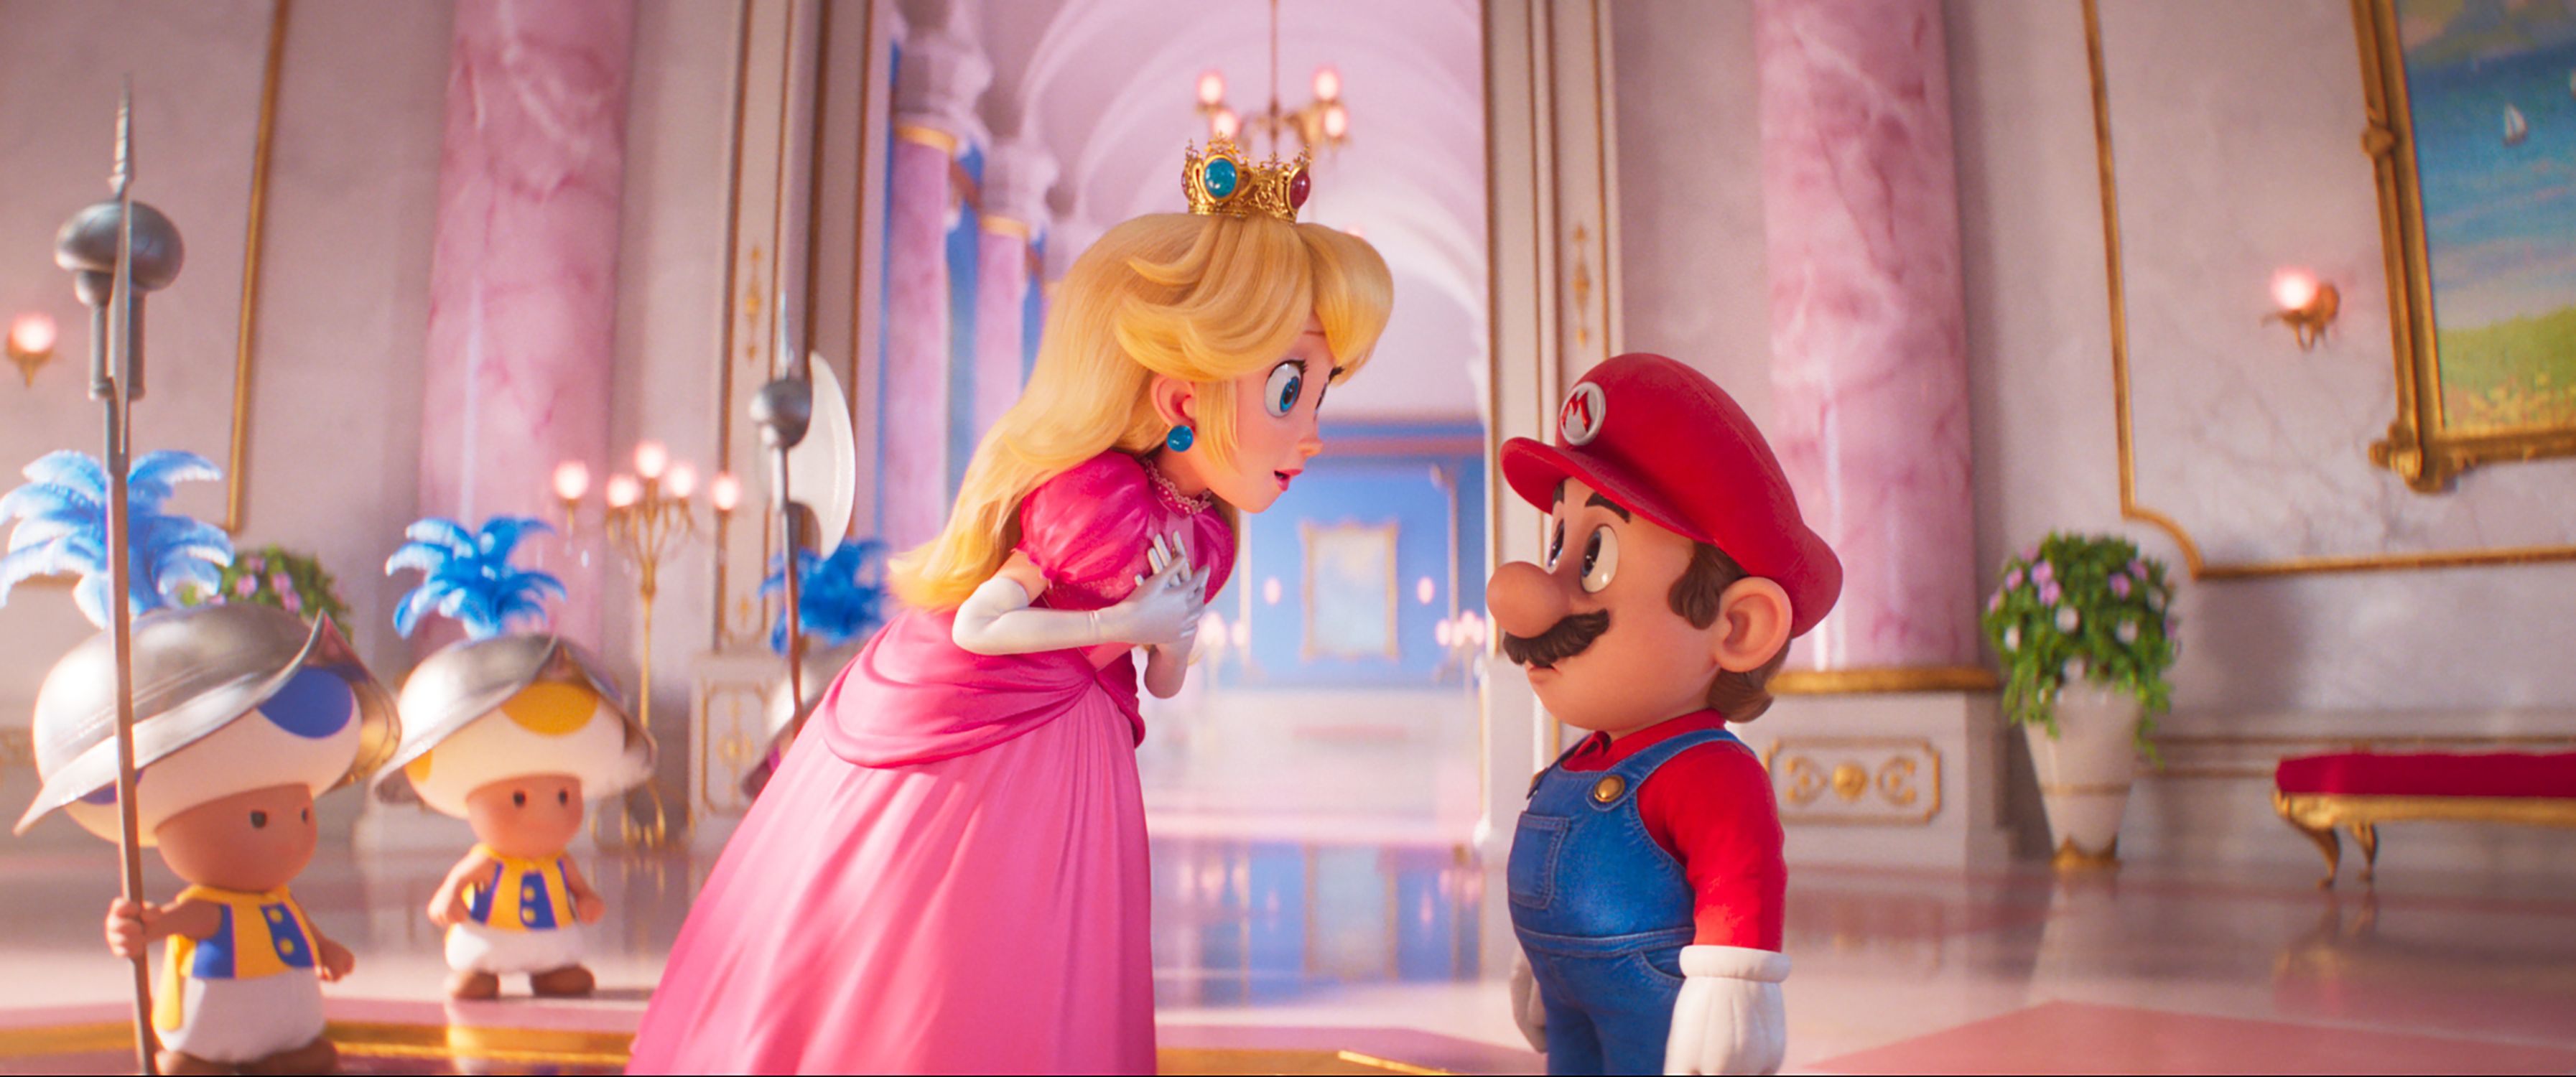 Shigeru Miyamoto Addresses Negative Super Mario Bros. Movie